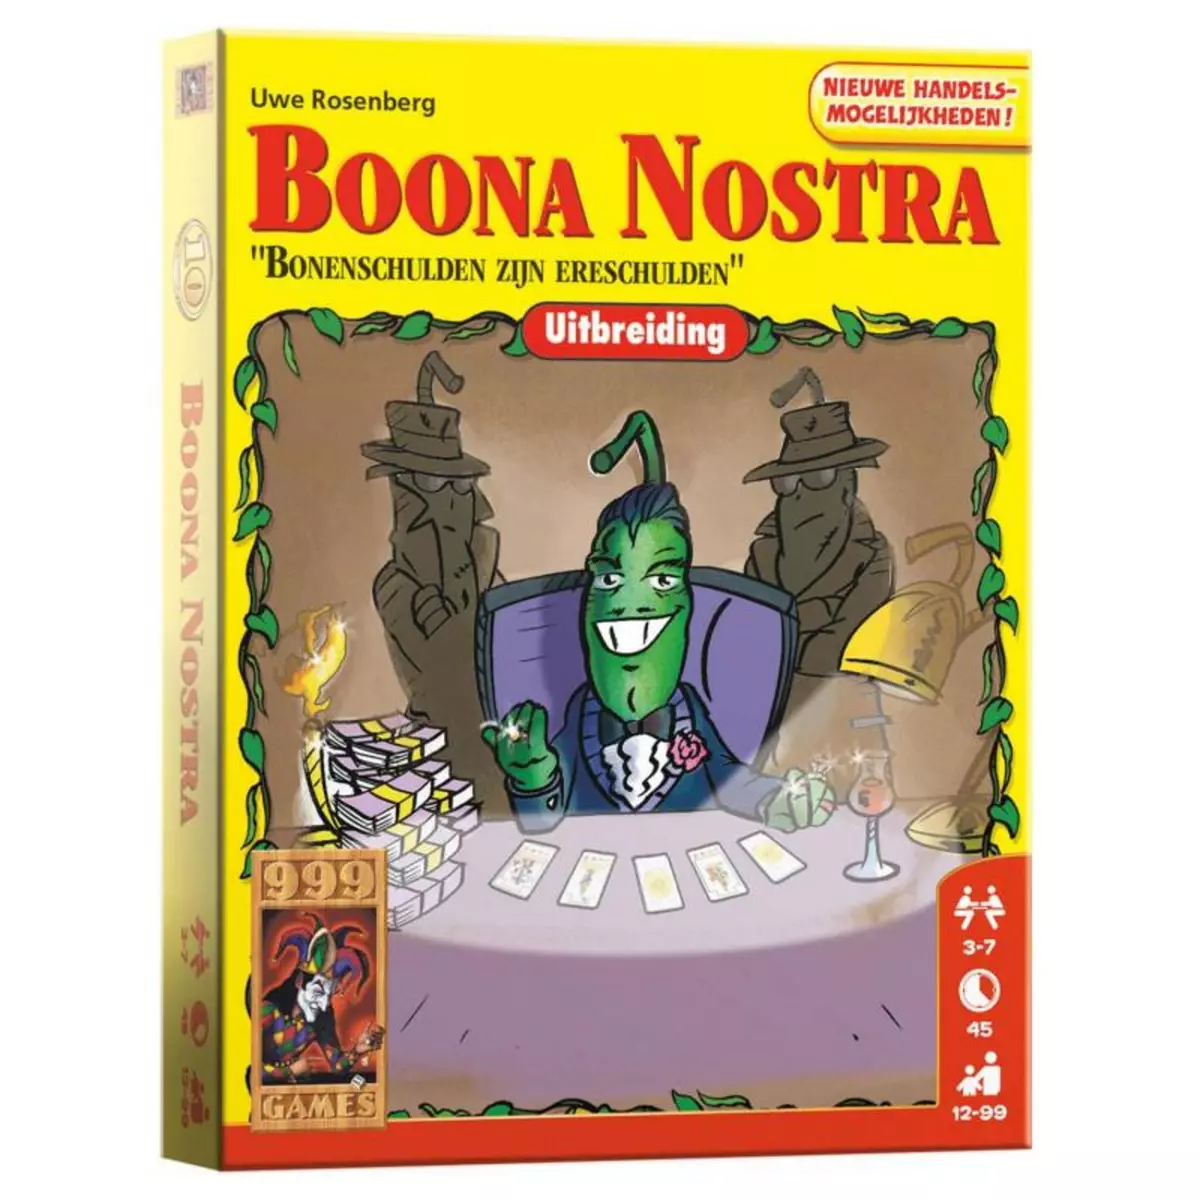 999 GAMES 999GAMES Boonanza Boona Nostra Card Game Expansion